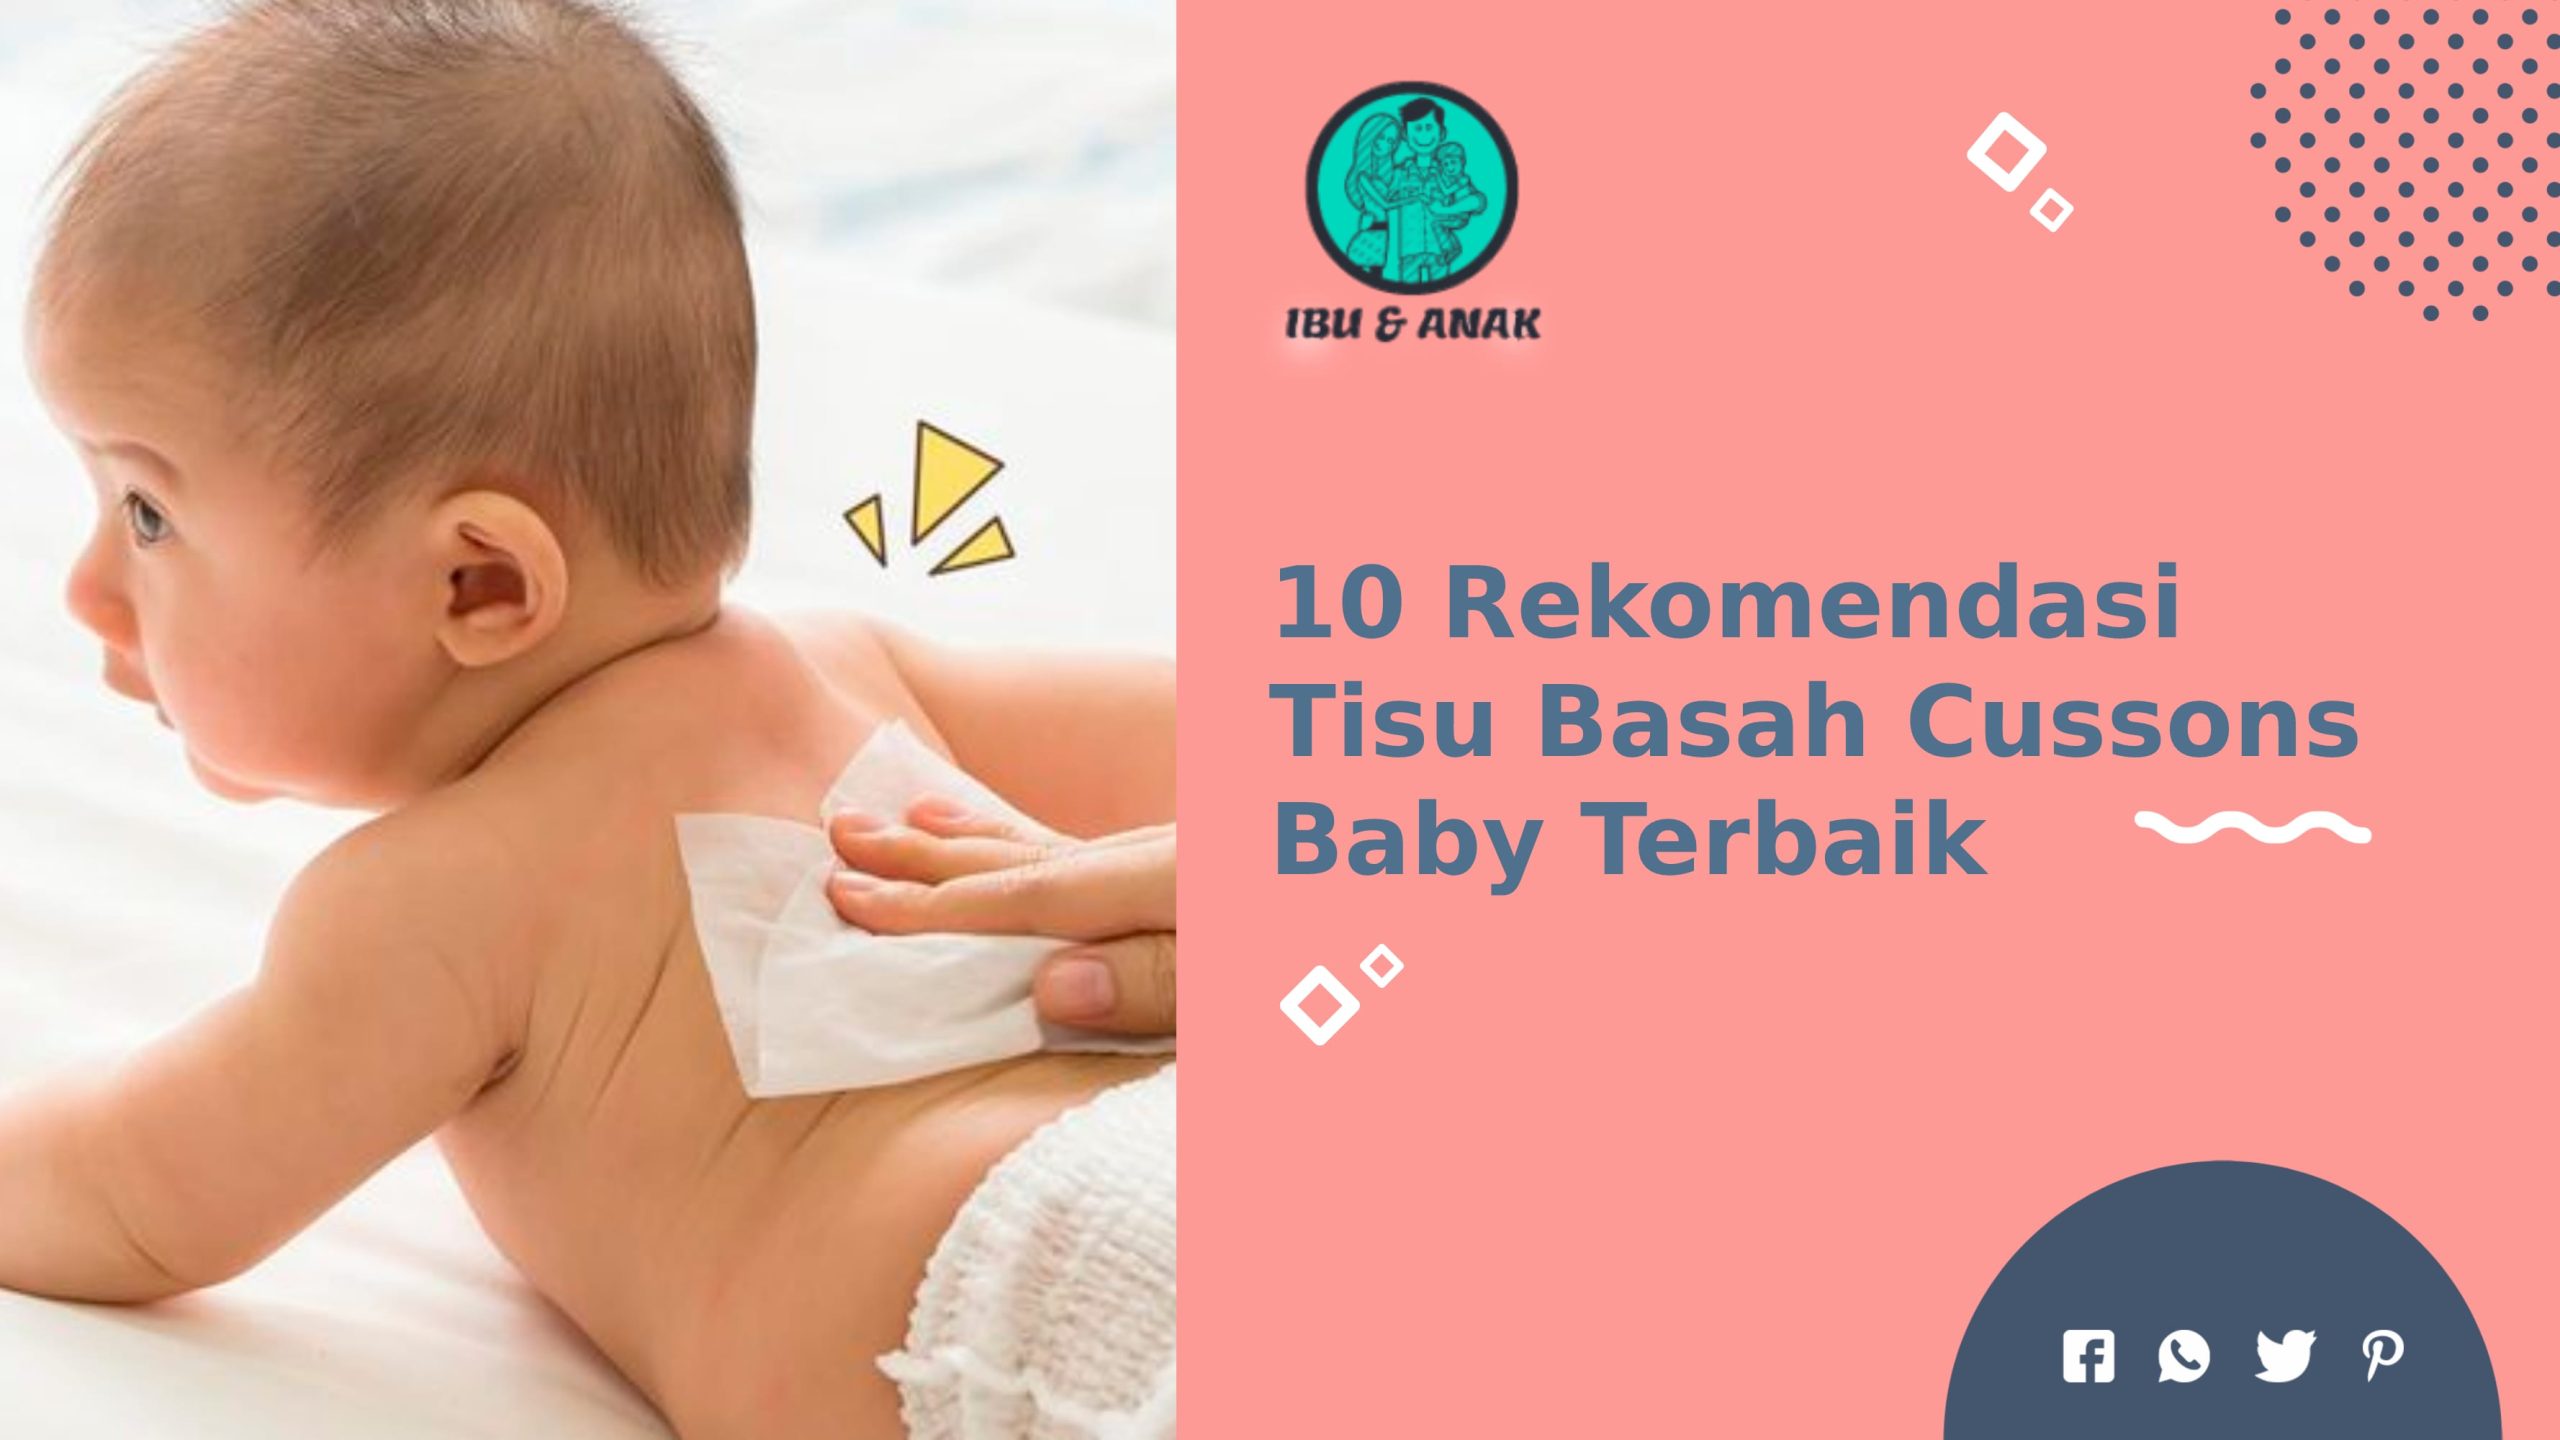 Rekomendasi Tisu Basah Cussons Baby